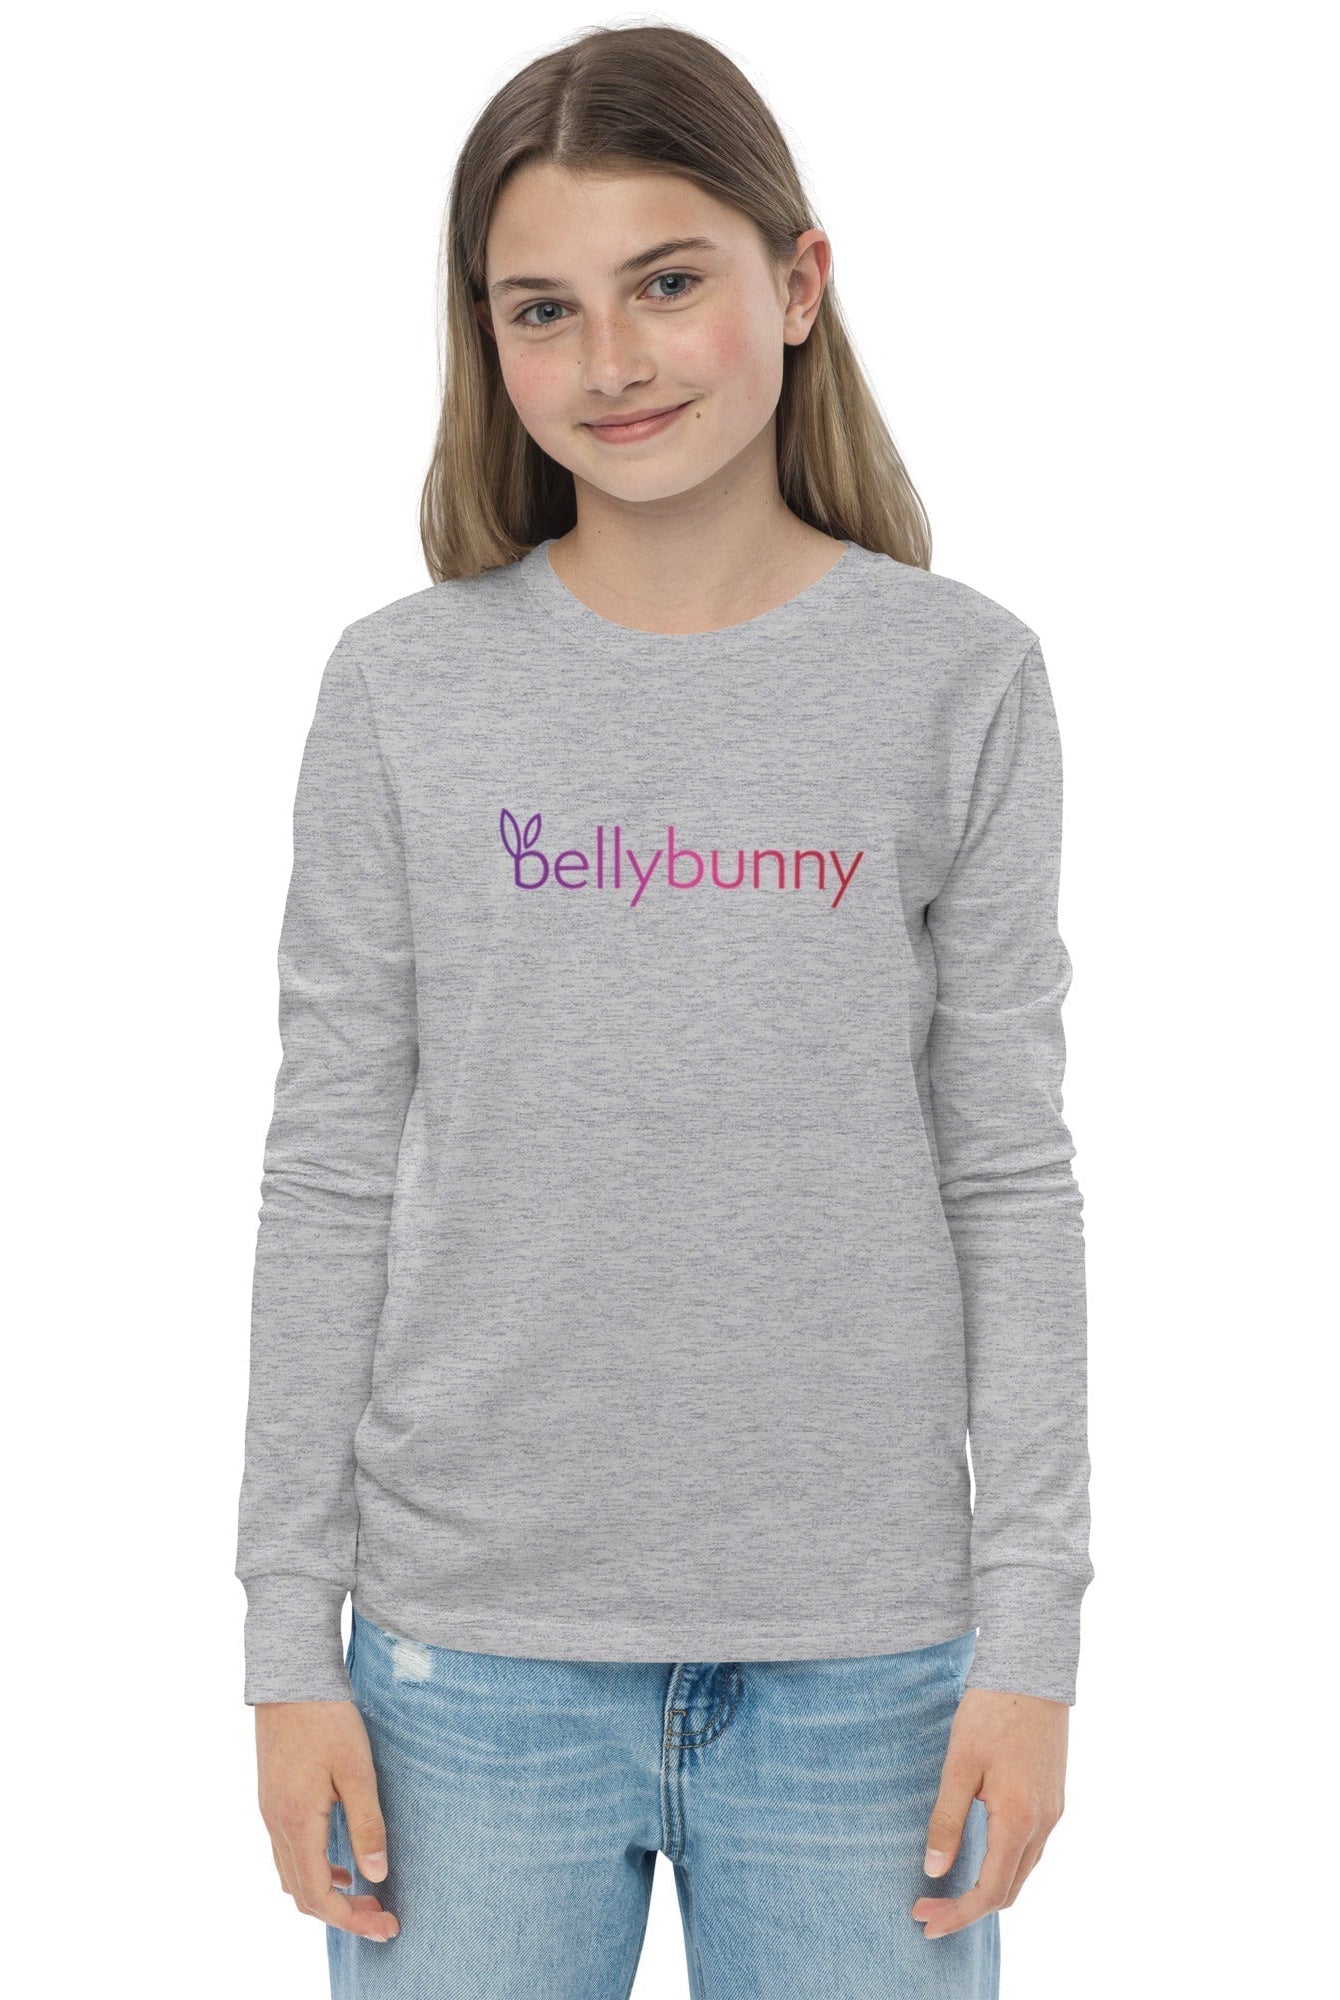 Bellybunny-Youth Long Sleeve Athletic Heather with rainbow logo